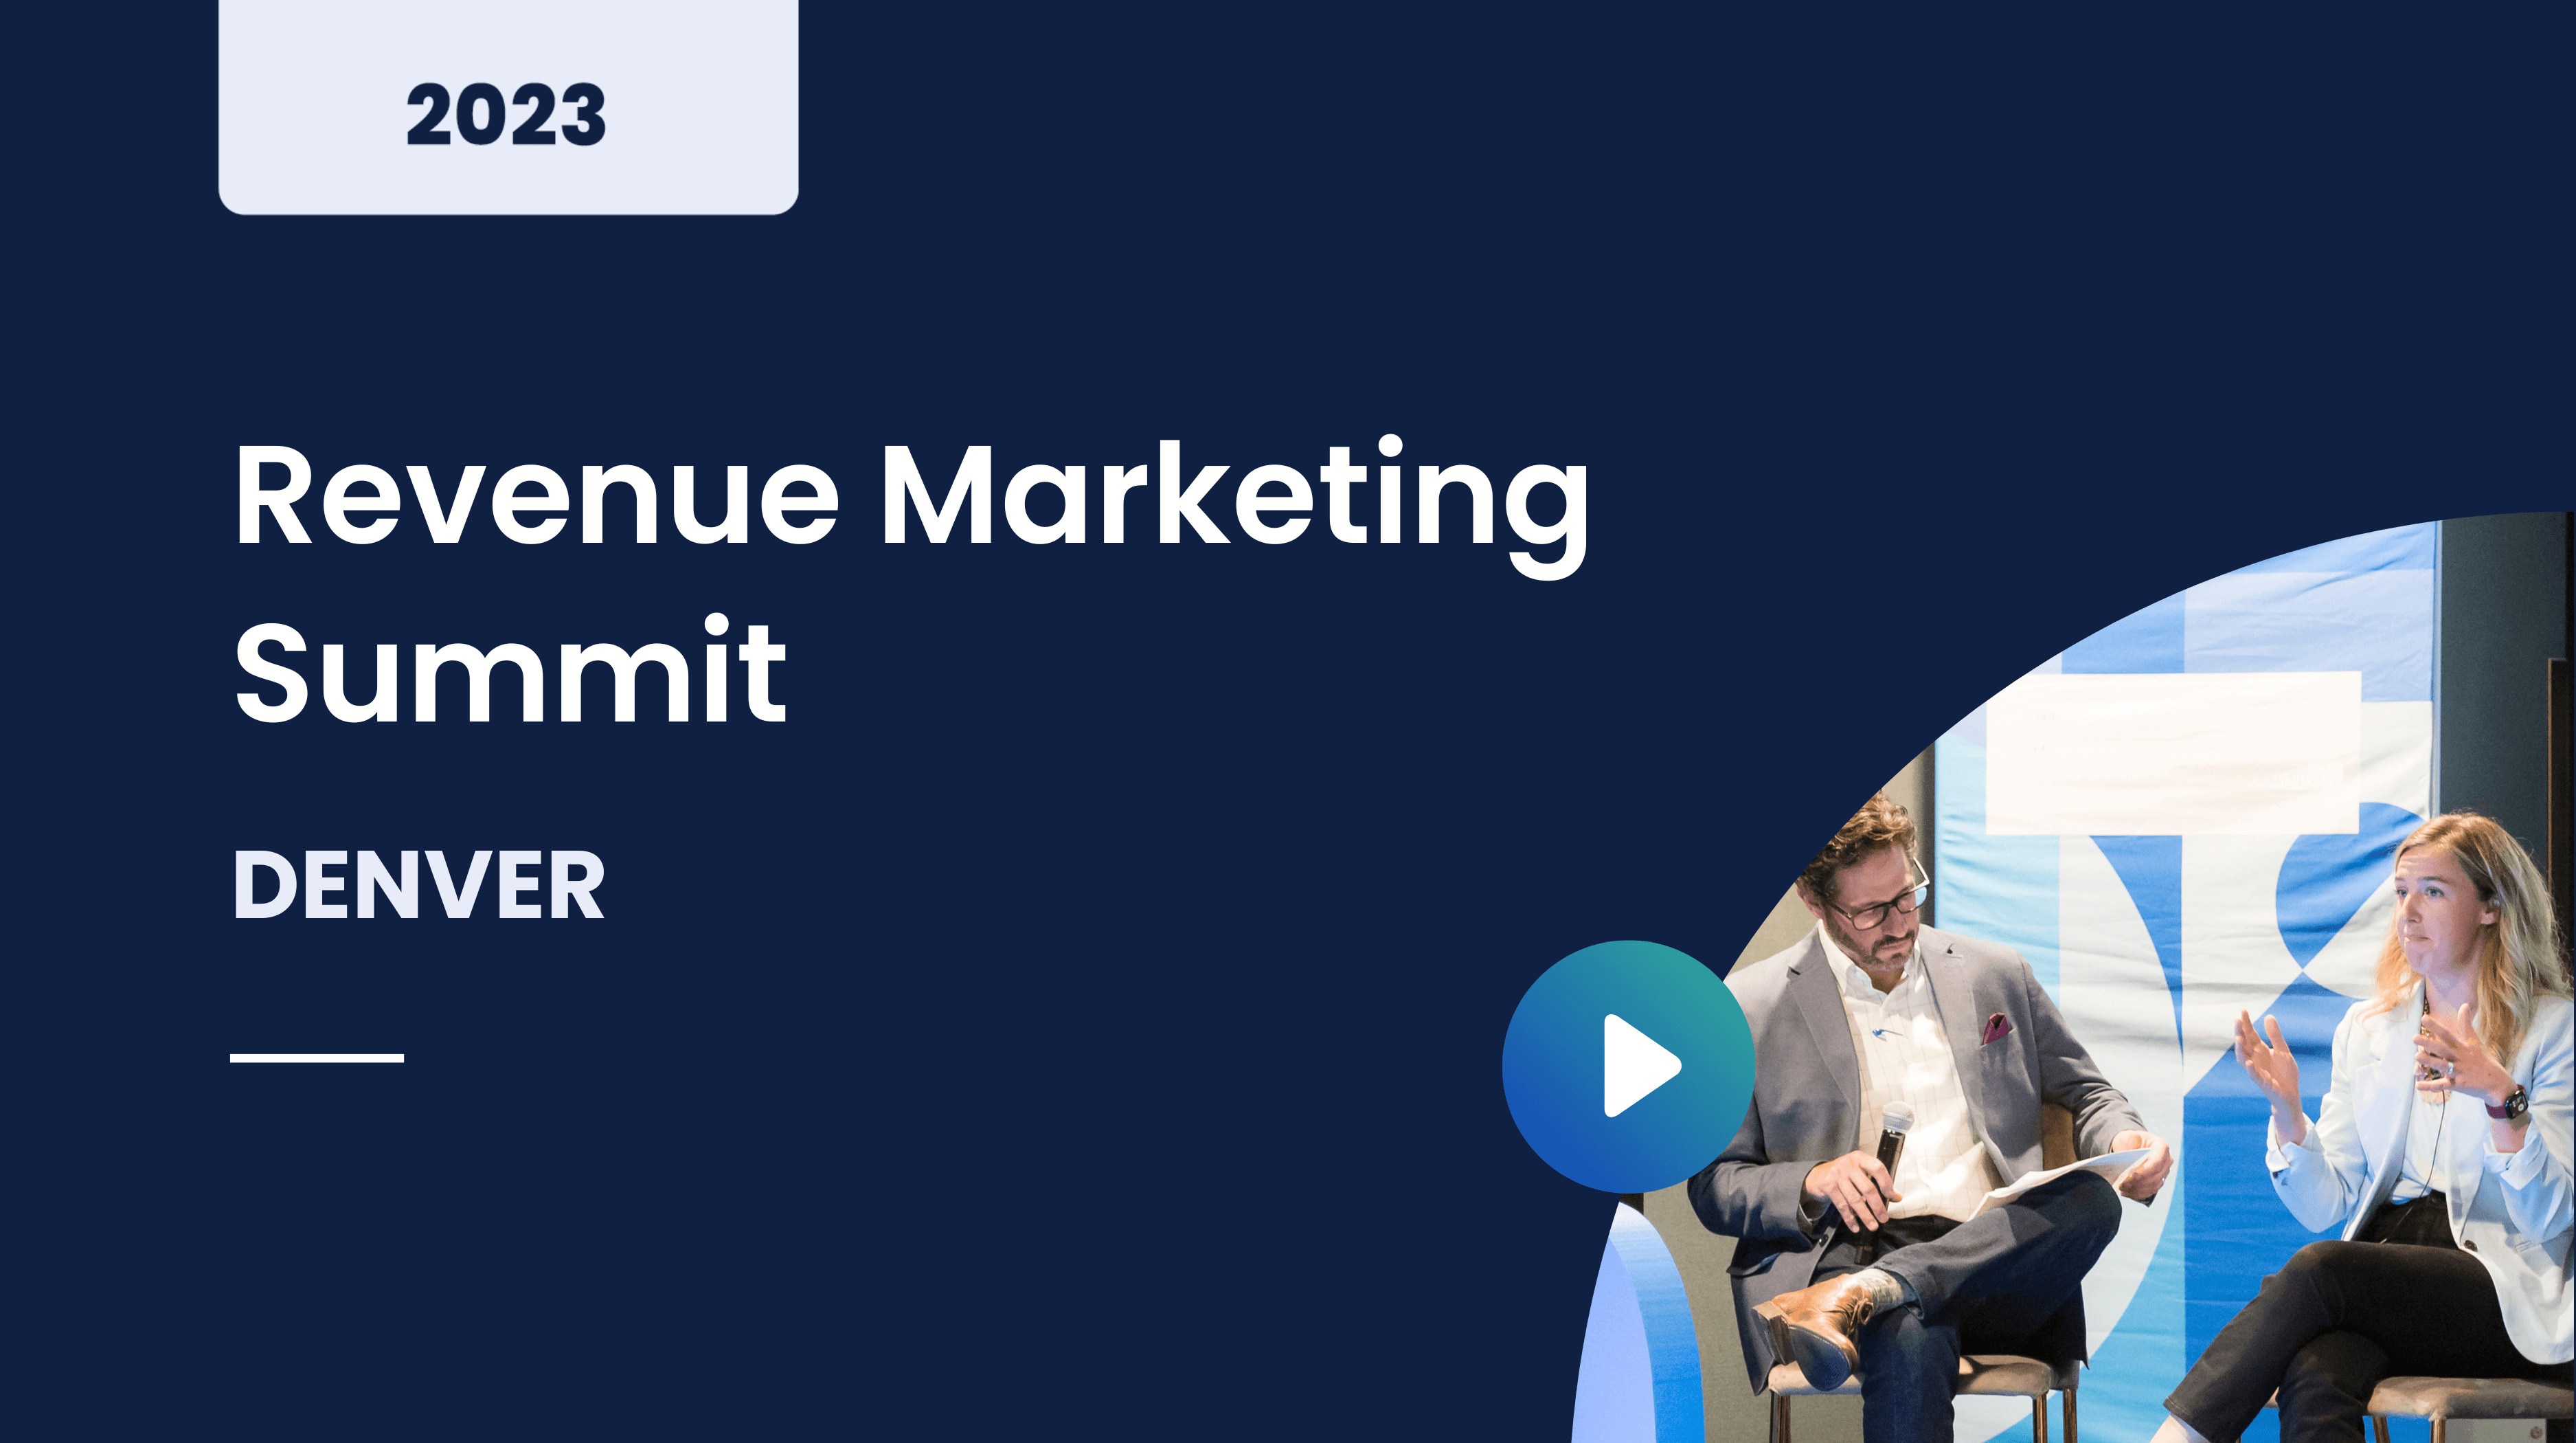 Revenue Marketing Summit Denver April 2023